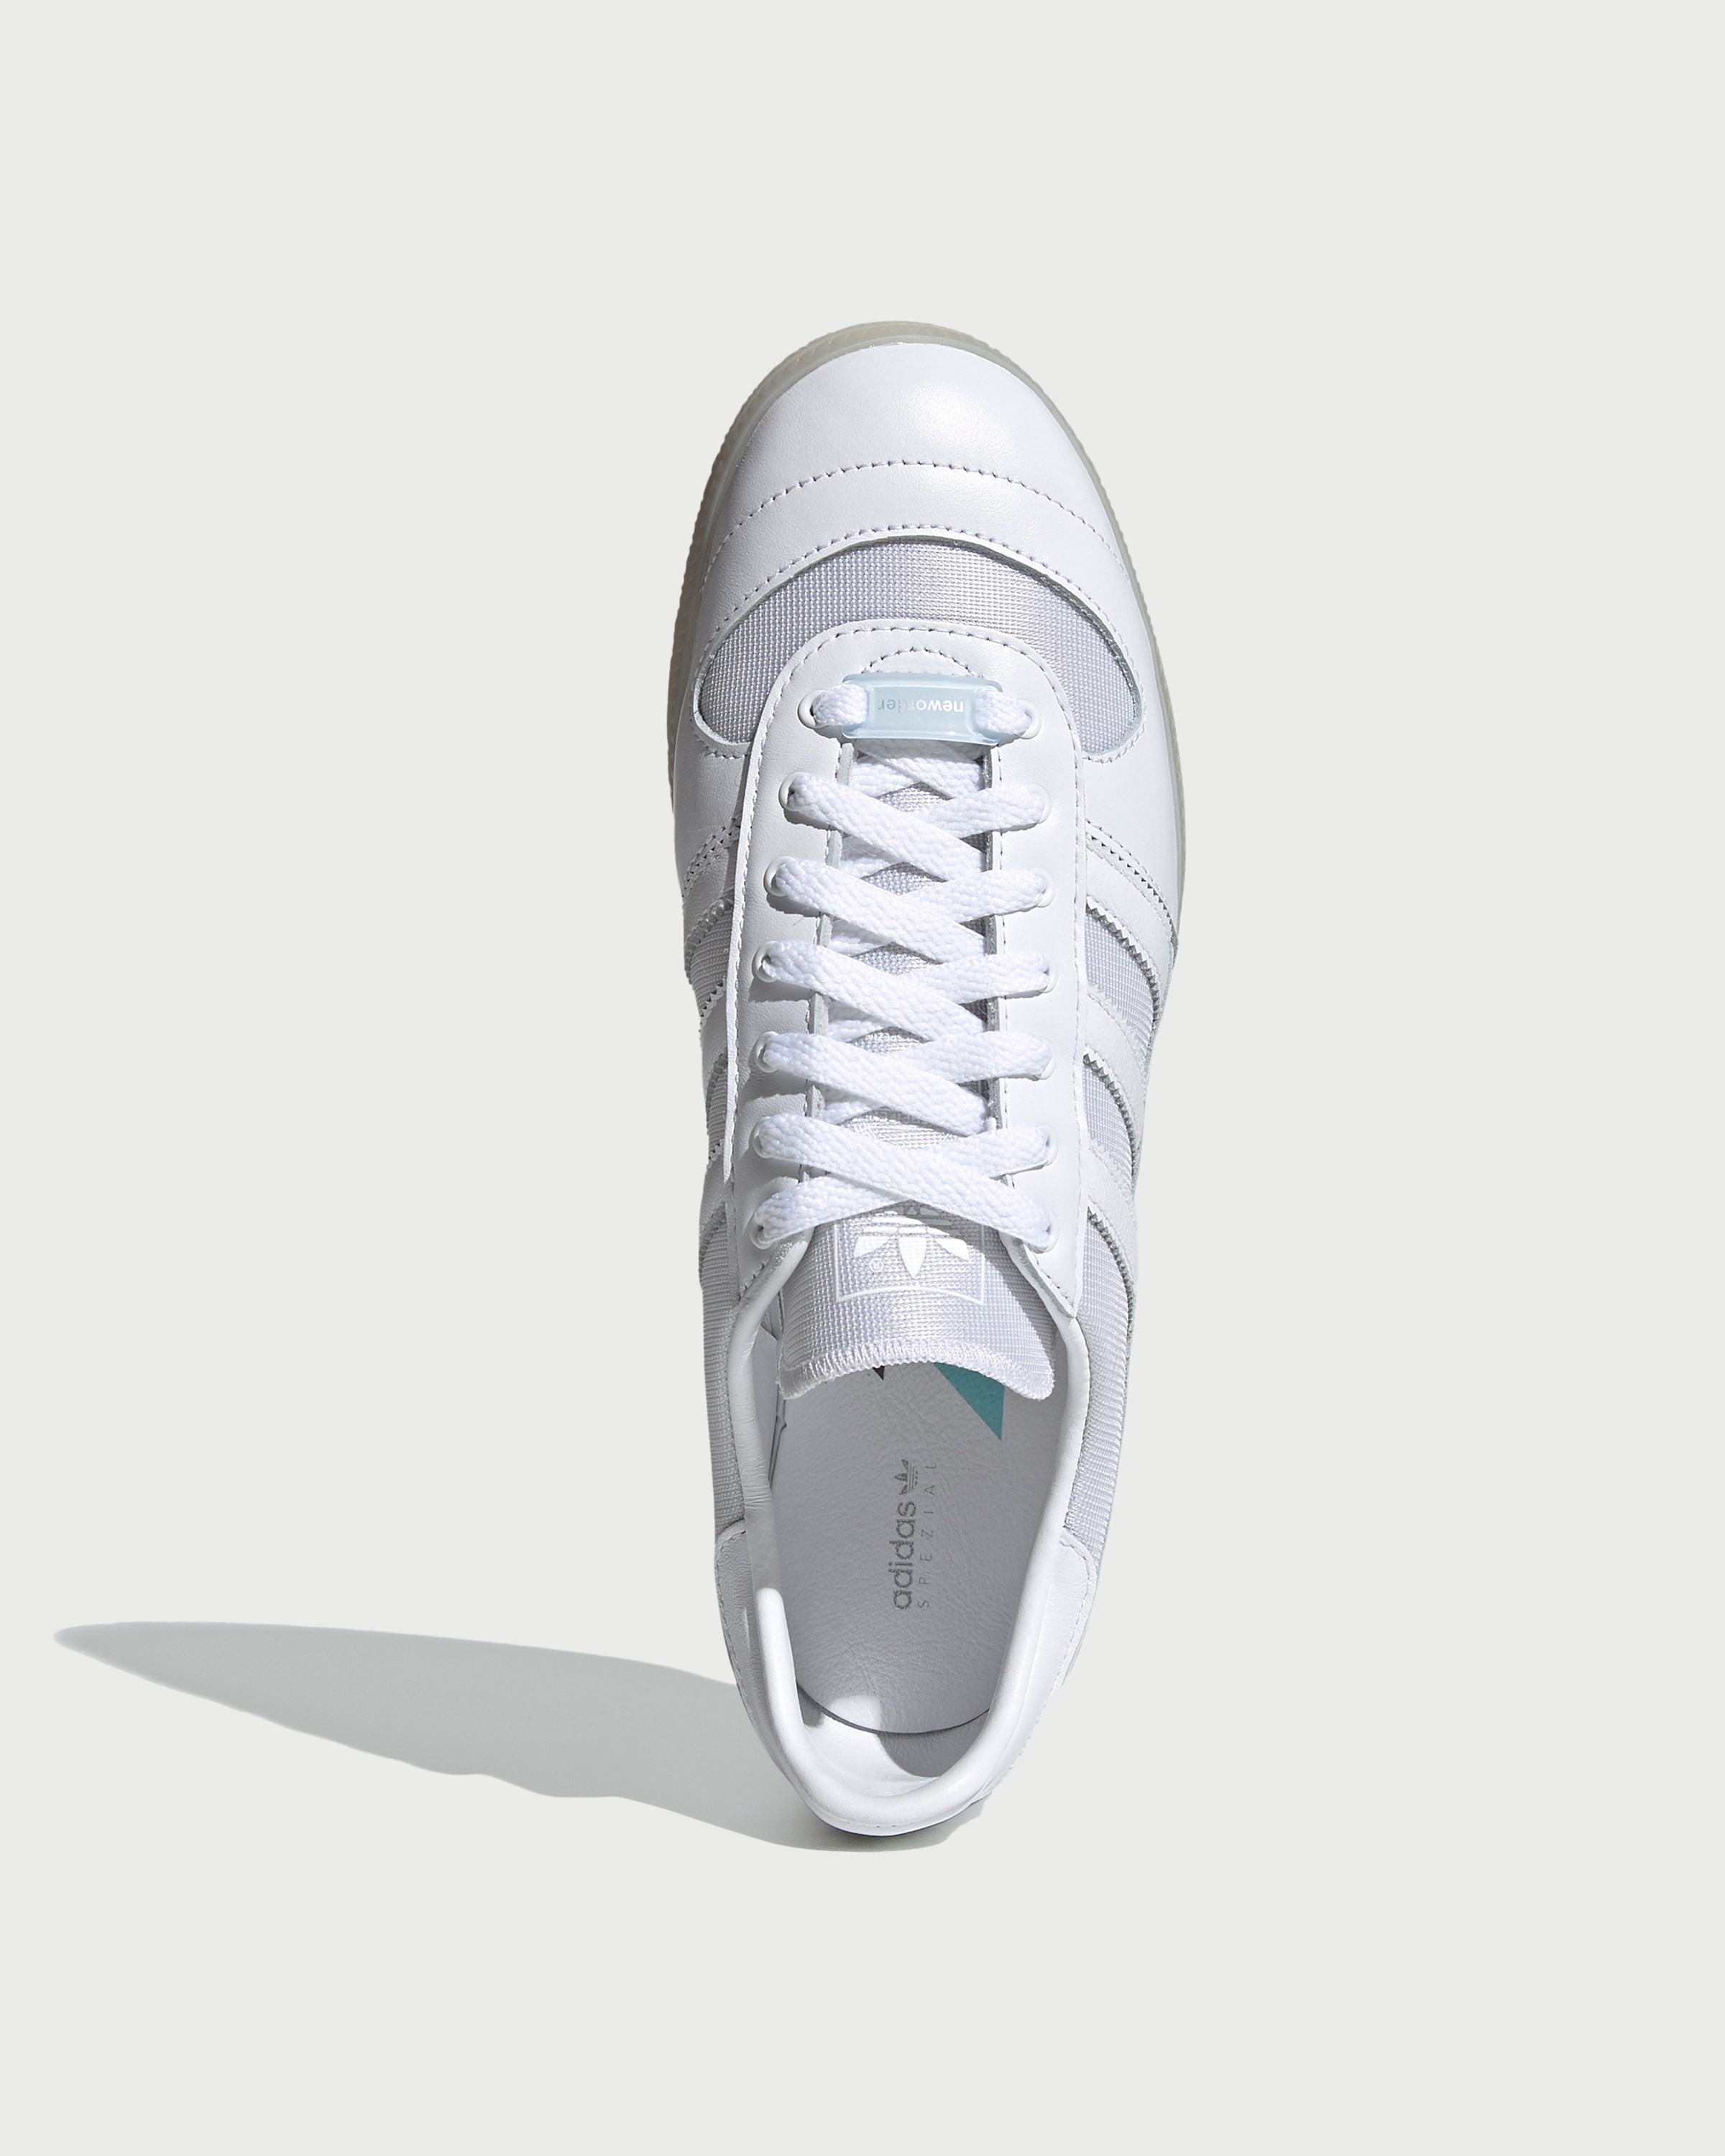 Adidas – Wilsy Spezial x New Order White - Low Top Sneakers - White - Image 3